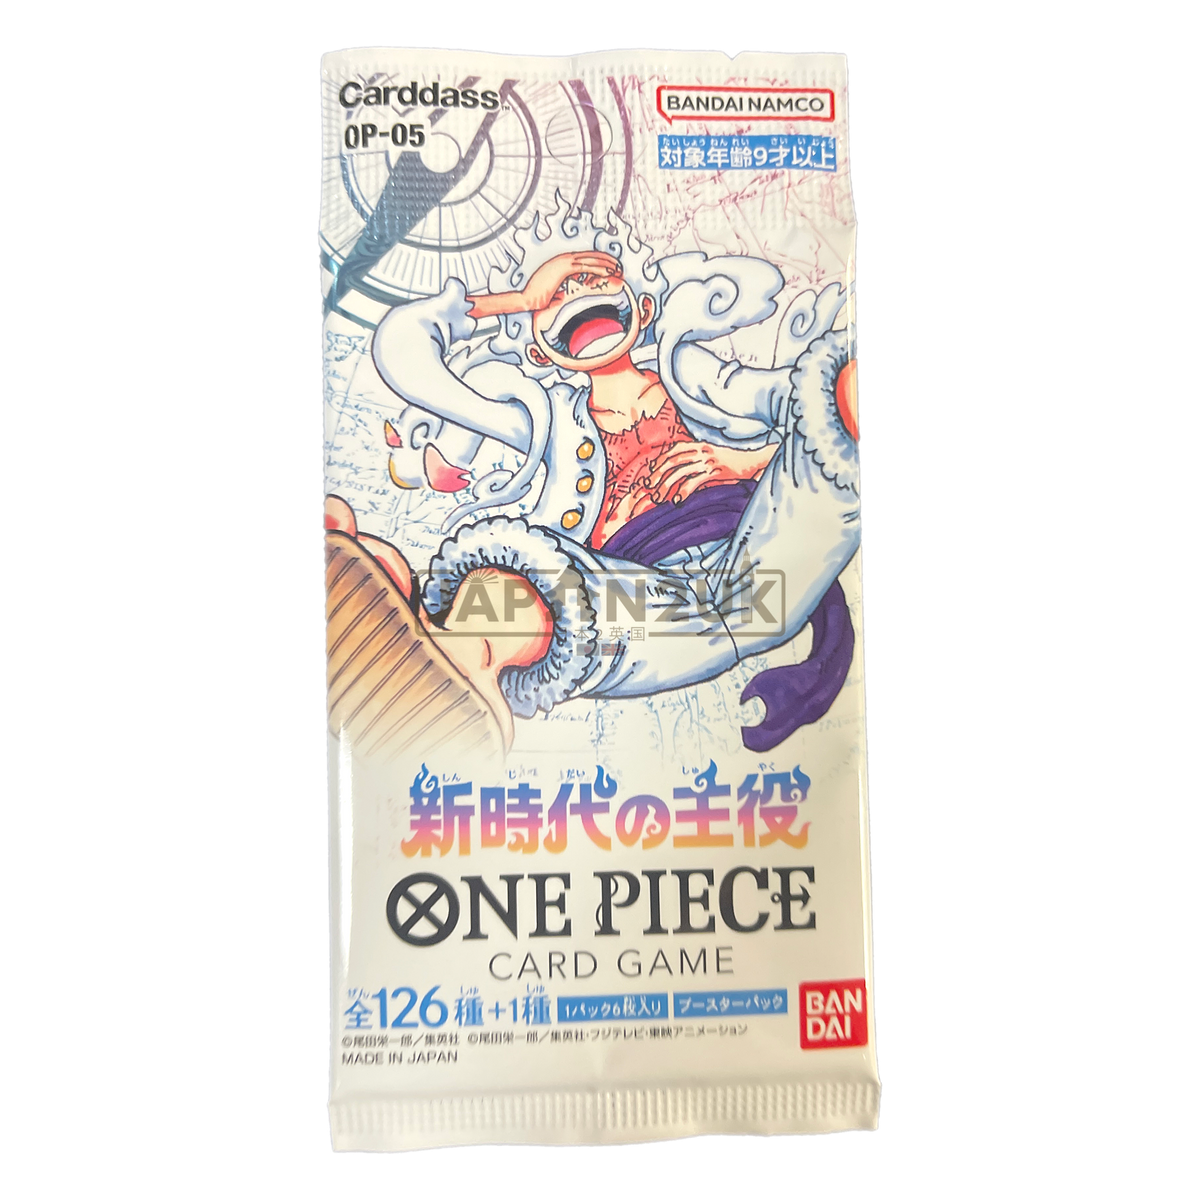 Project Bursting Rage Коды (март 2022 г.) — One Piece 